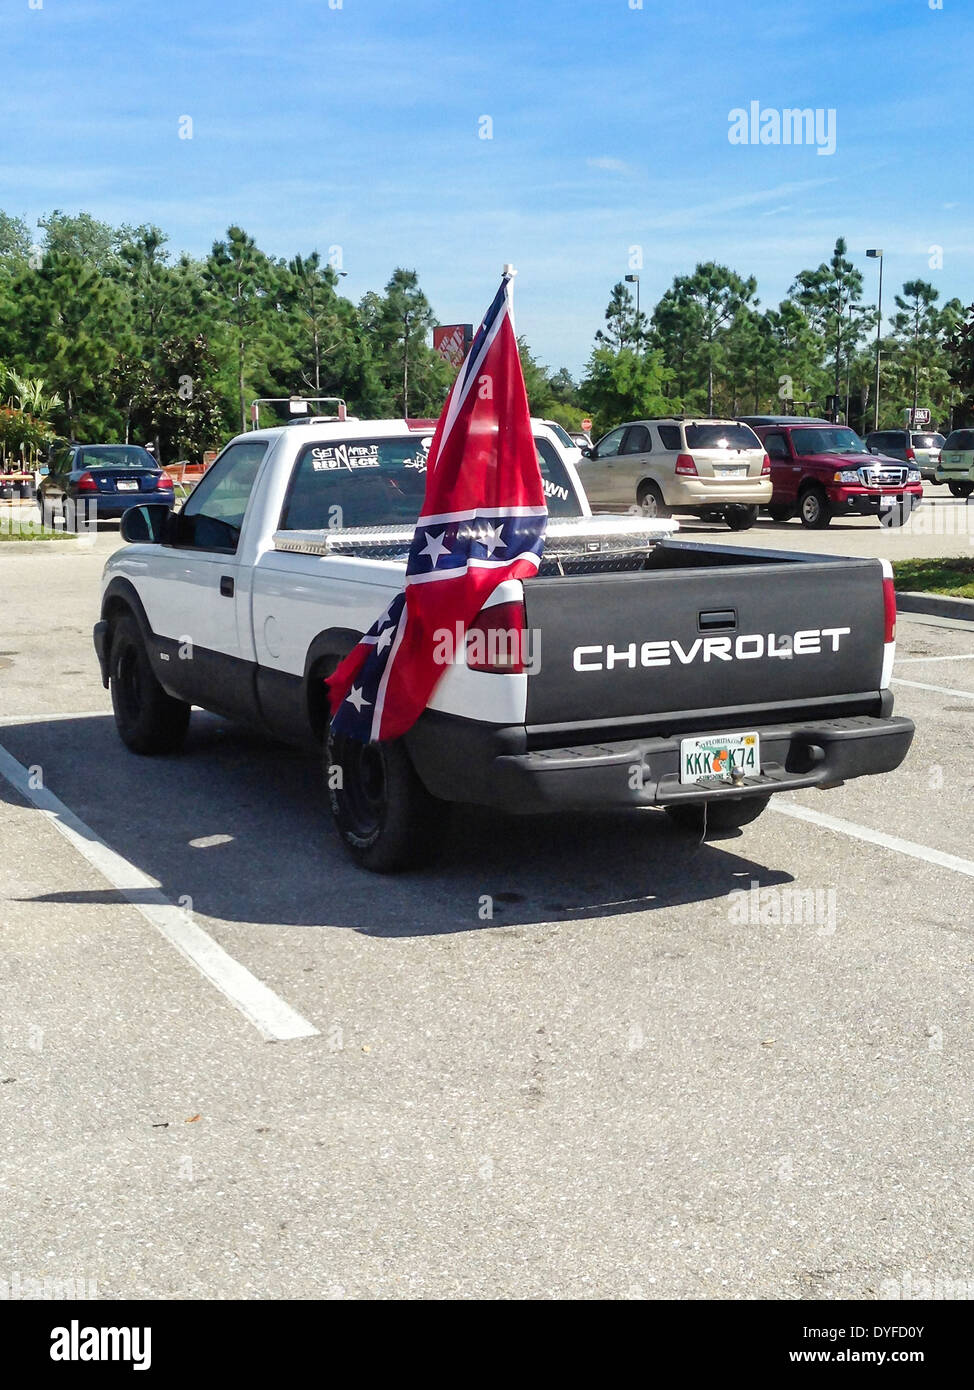 Florida redneck transport complete with rebel flag and kkk plate Stock Photo